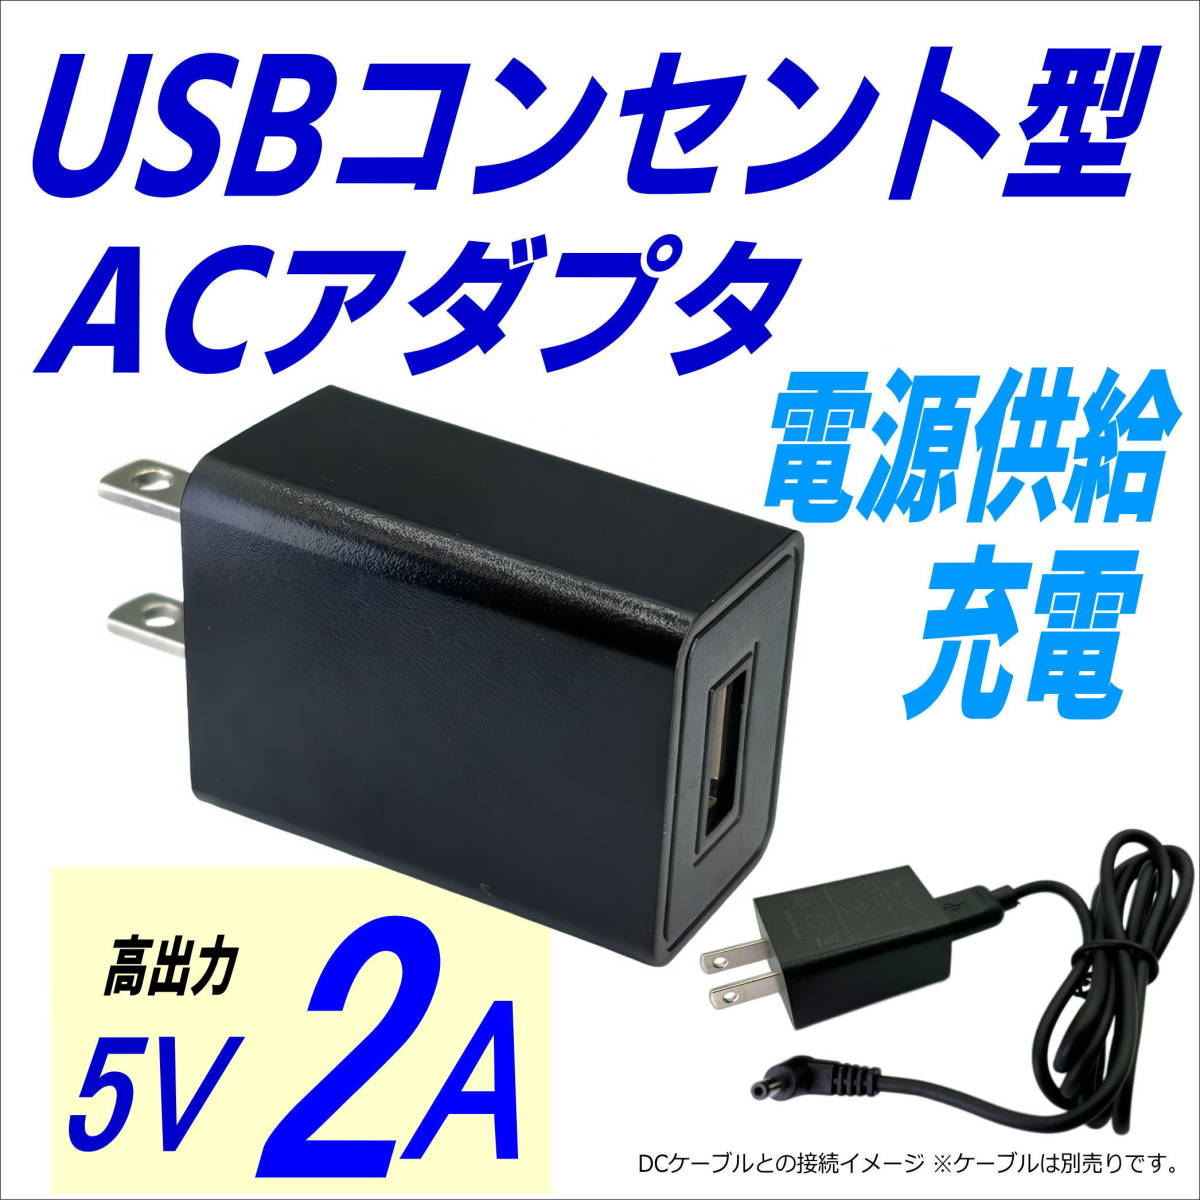 USBコンセント型アダプタ 出力5V/2A スマホ、タブレット充電に最適 USB A(メス)ケーブルを接続 高出力2A USC5V2A-◇_画像1